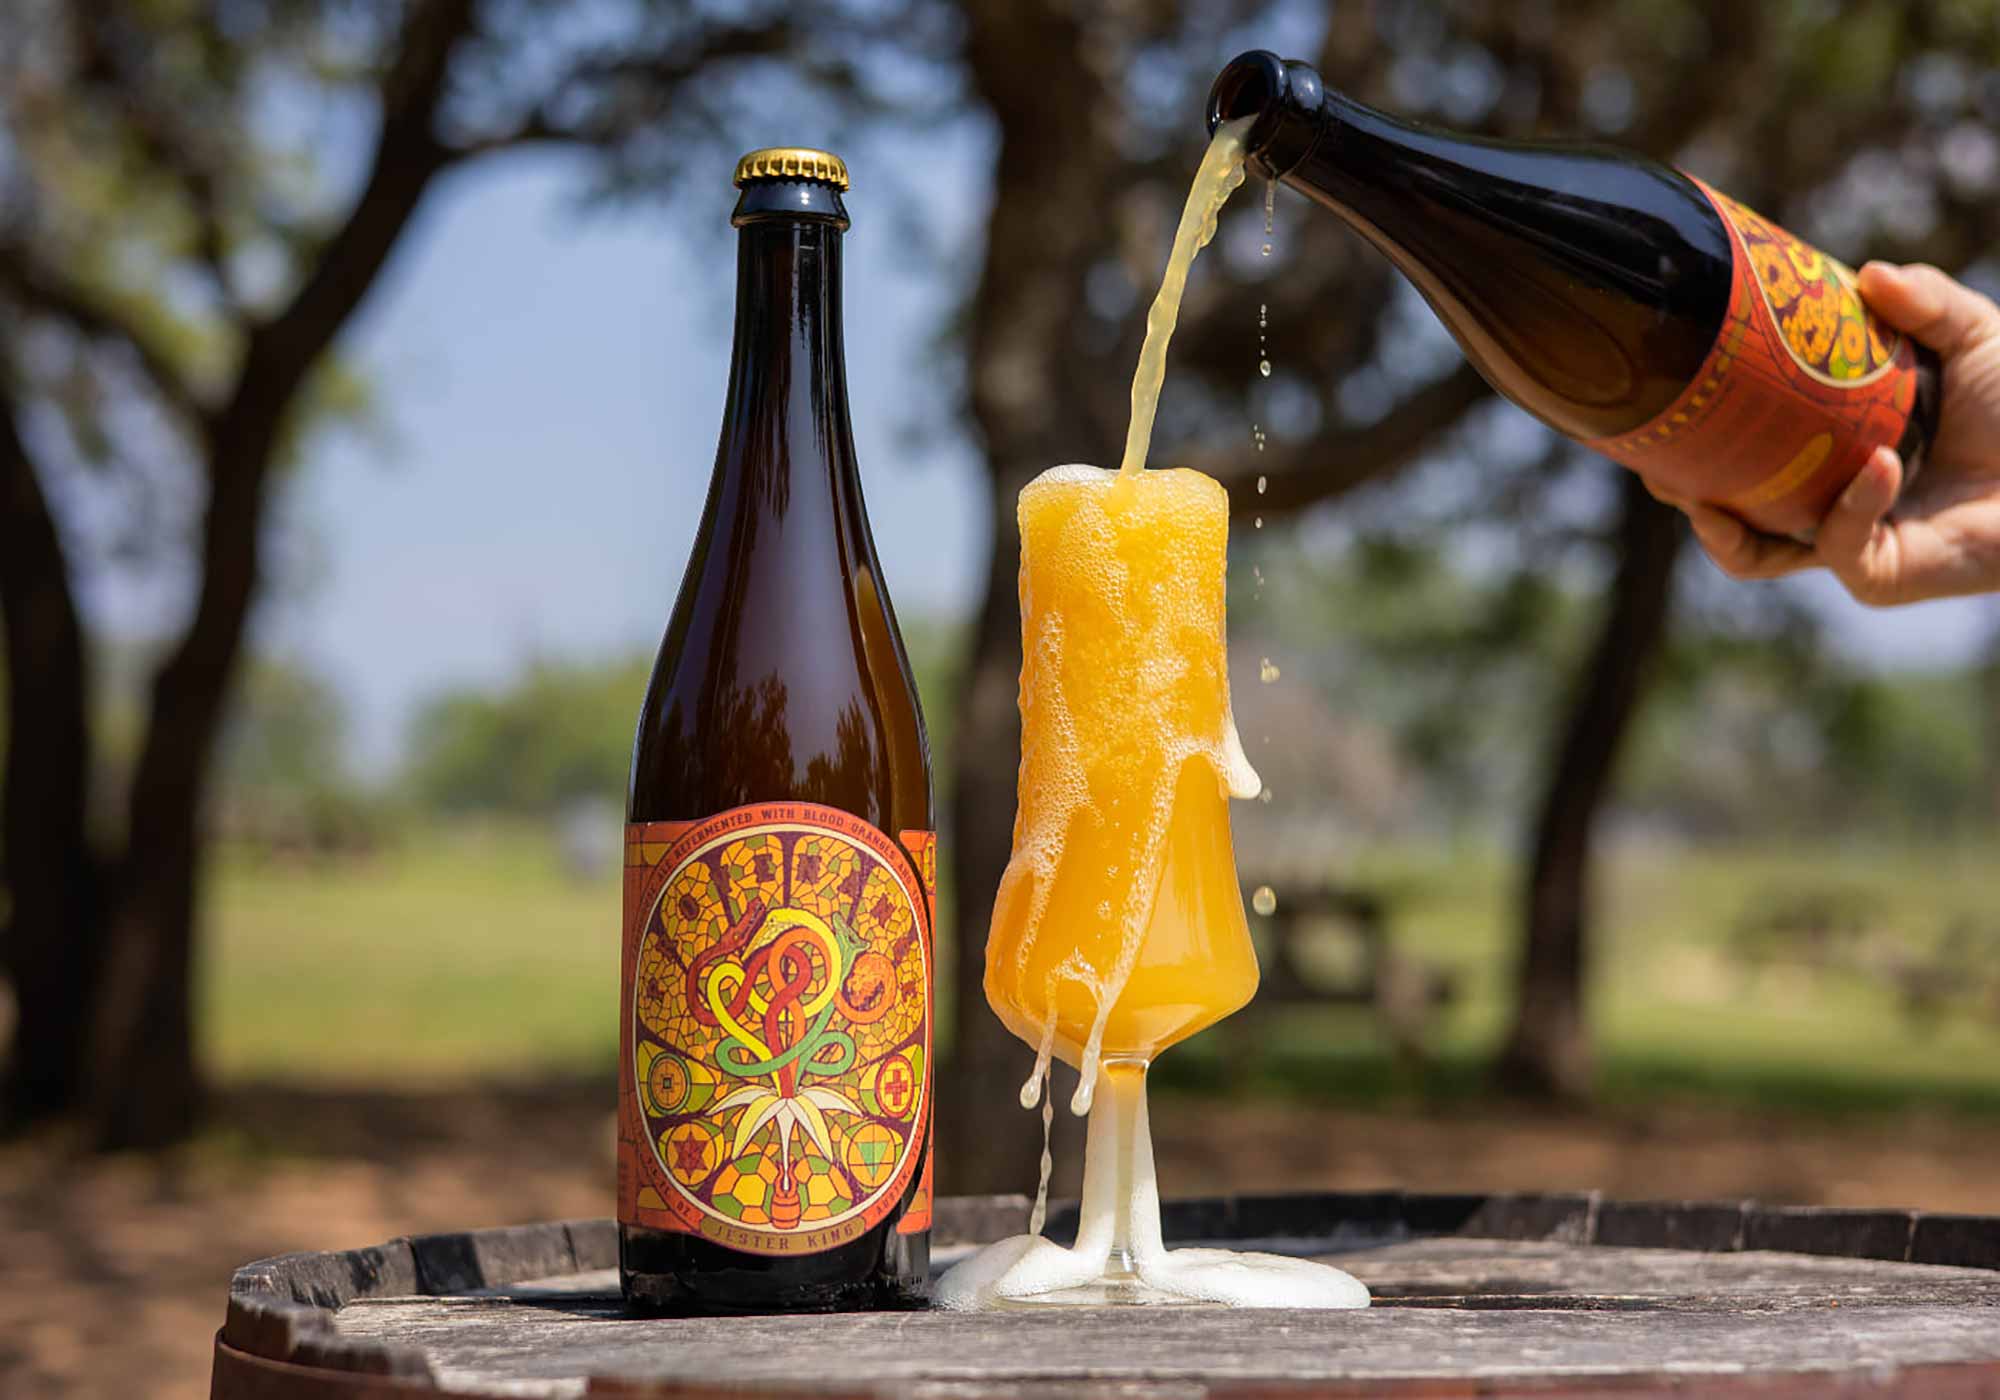 Tasting Jester King Brewery Provenance Blood Orange and Tangerine Sour Beer